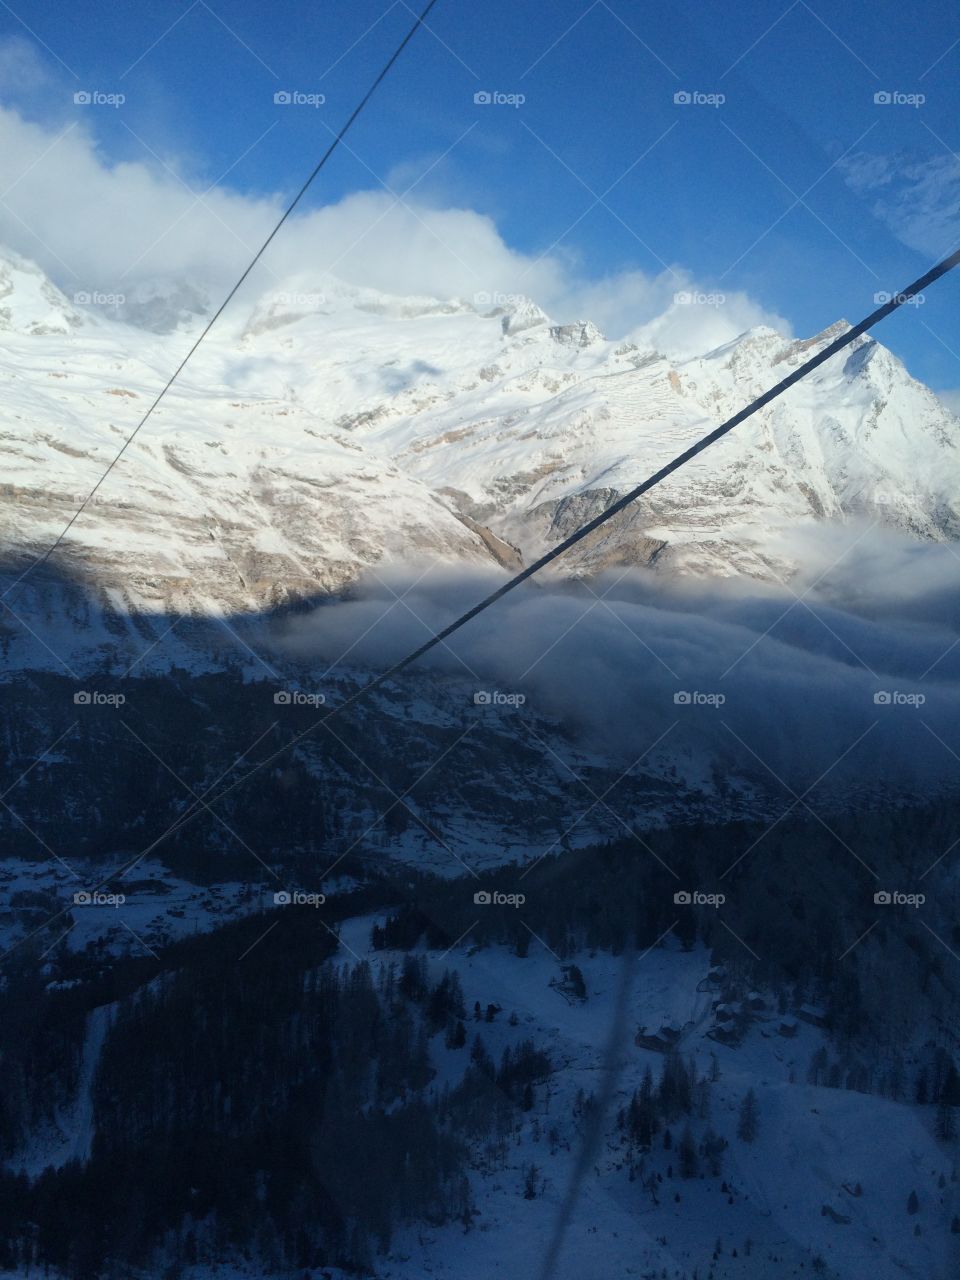 Cable car ride in Zermatt, Switzerland.